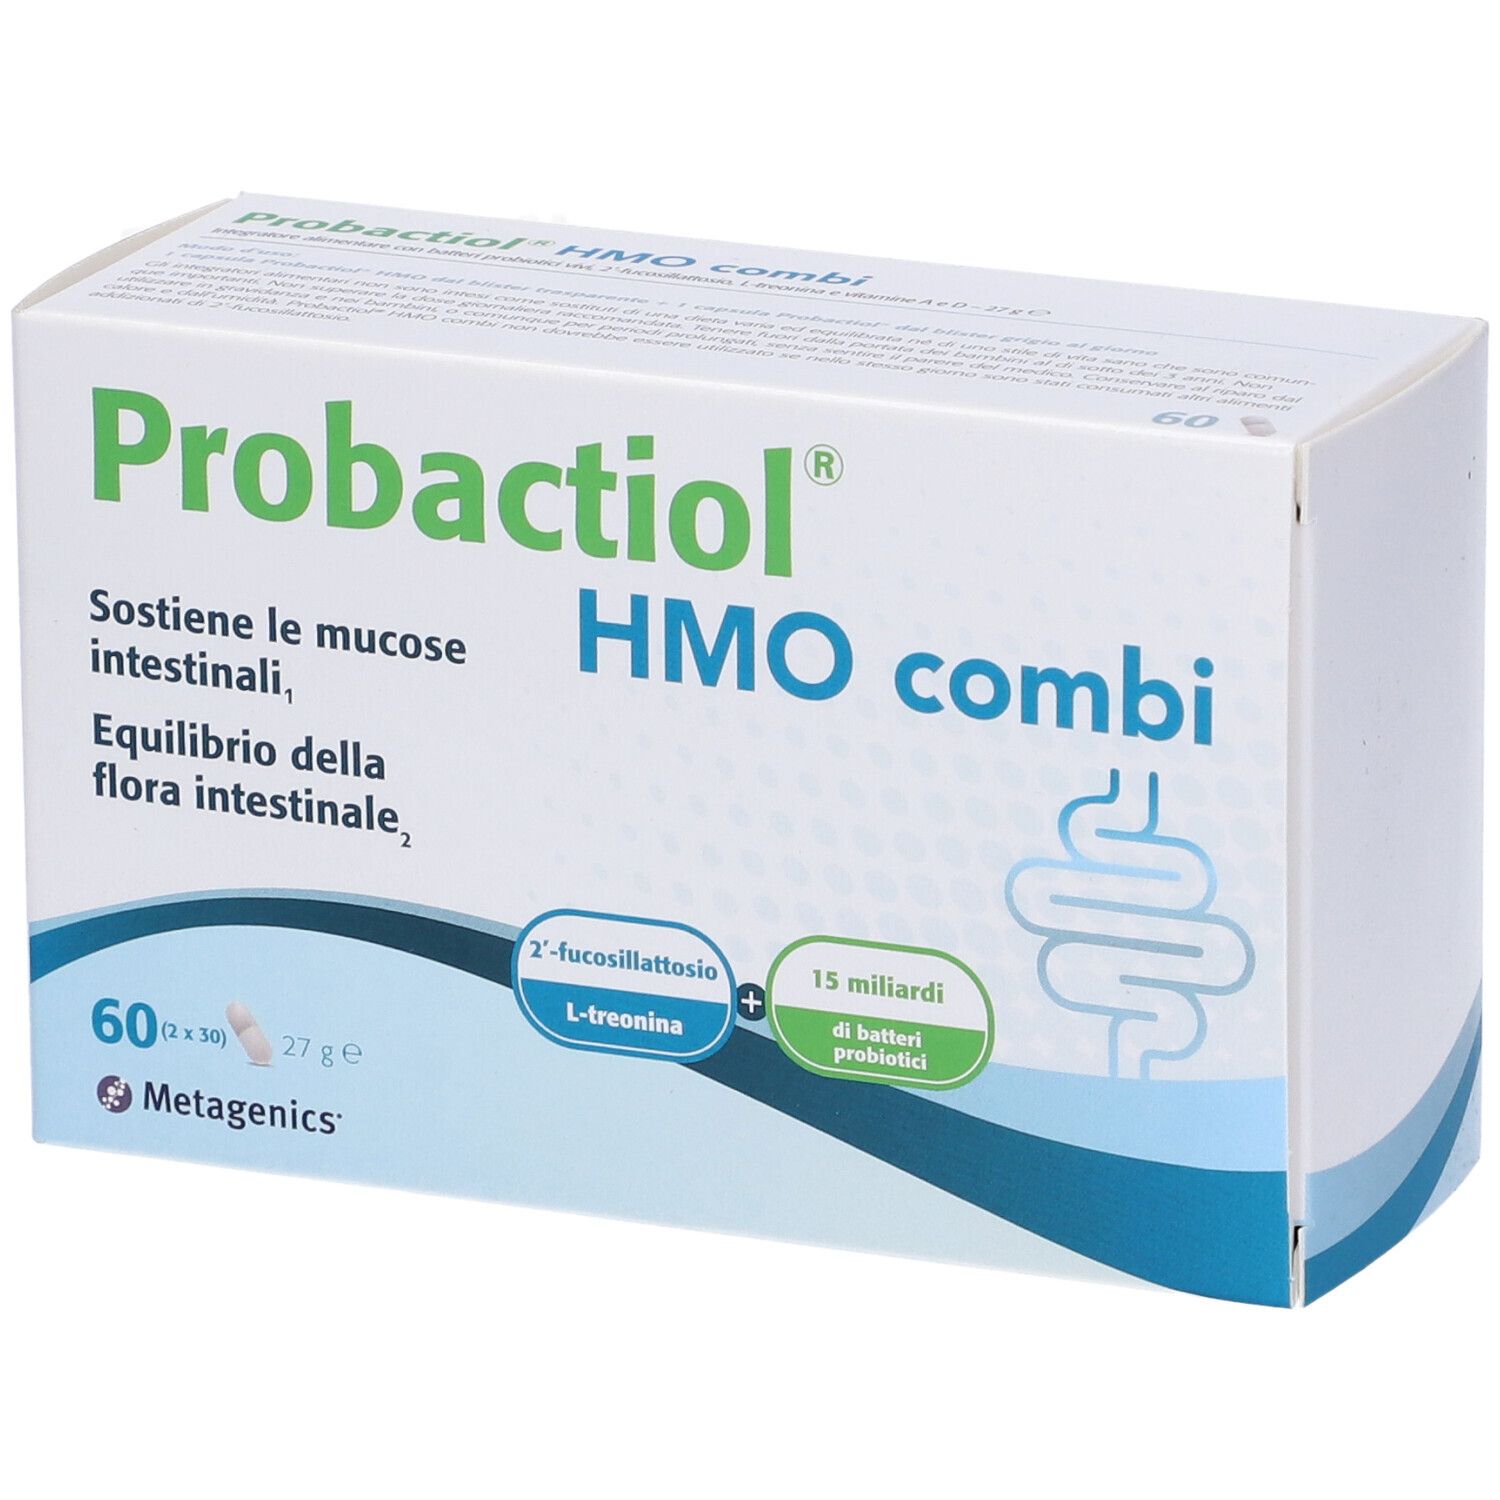 Metagenics™ Probactiol® HMO Combi